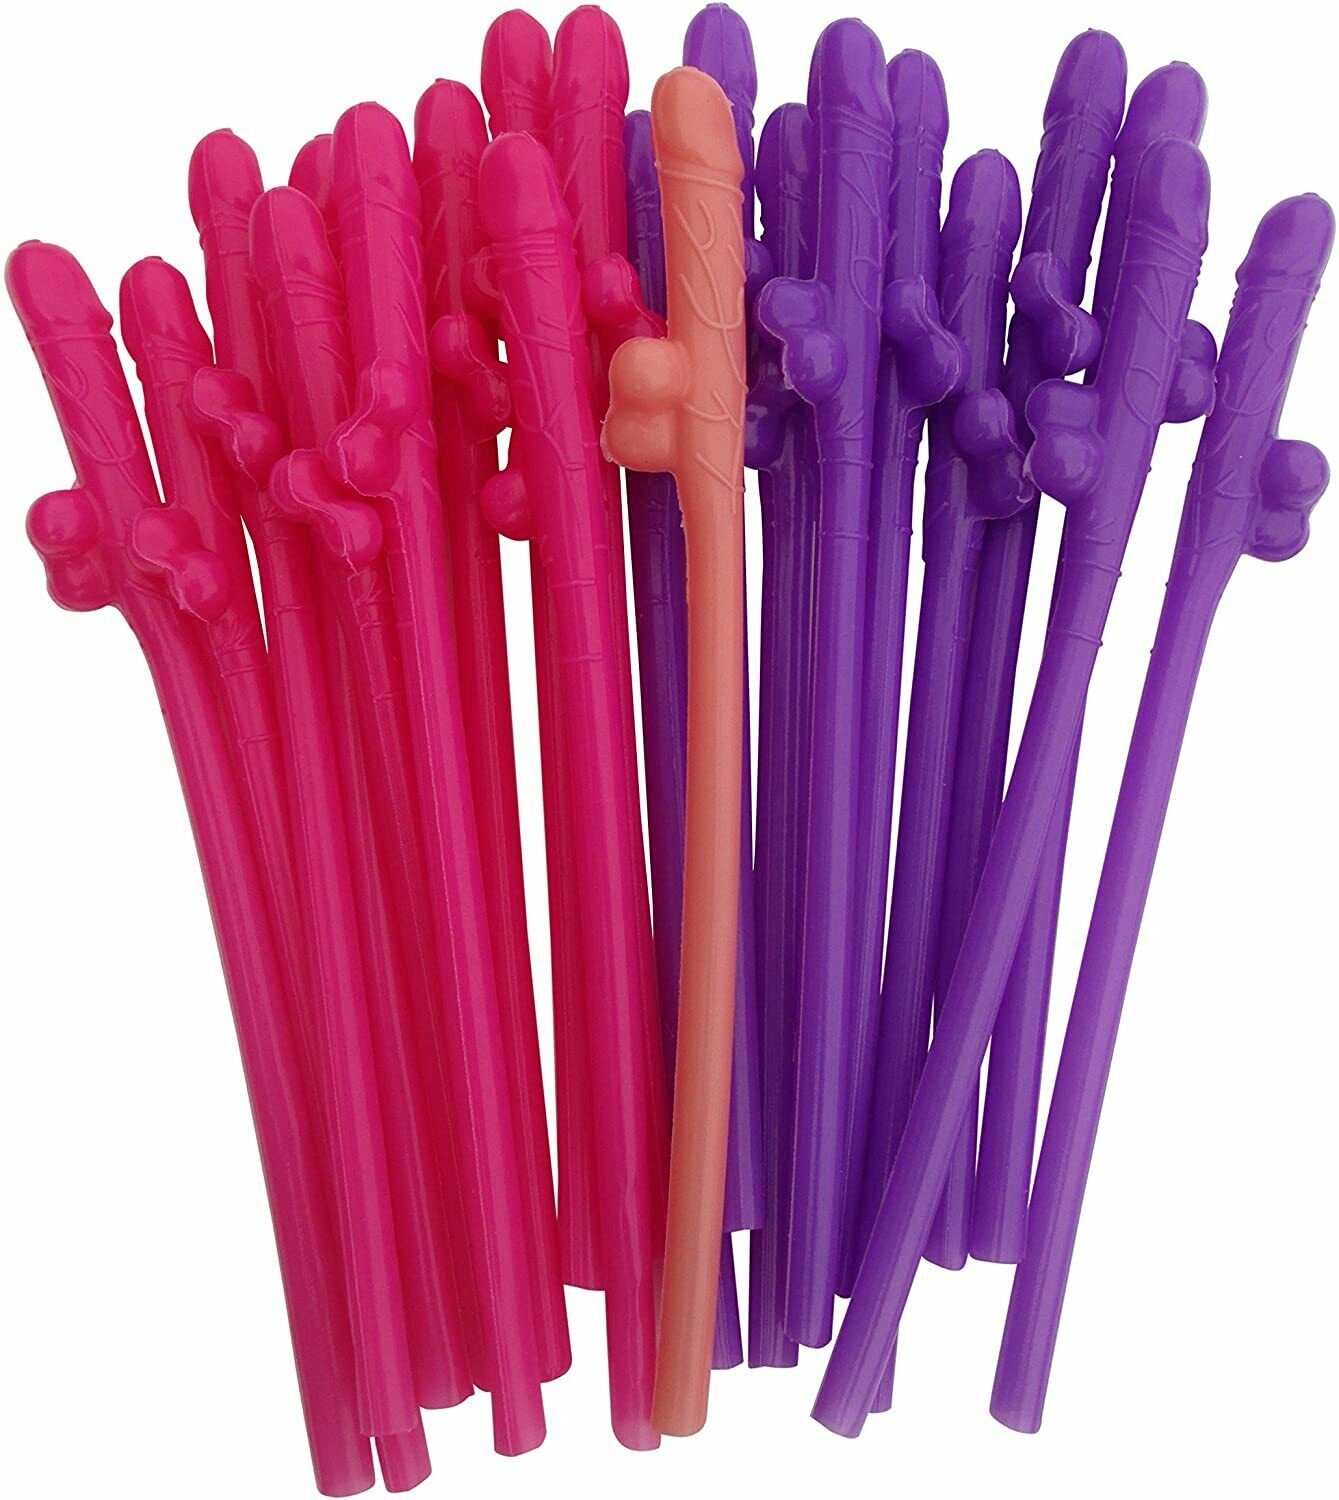 Mr. Happy Party Straws By Naughti Hottie - 21 Penis Straws